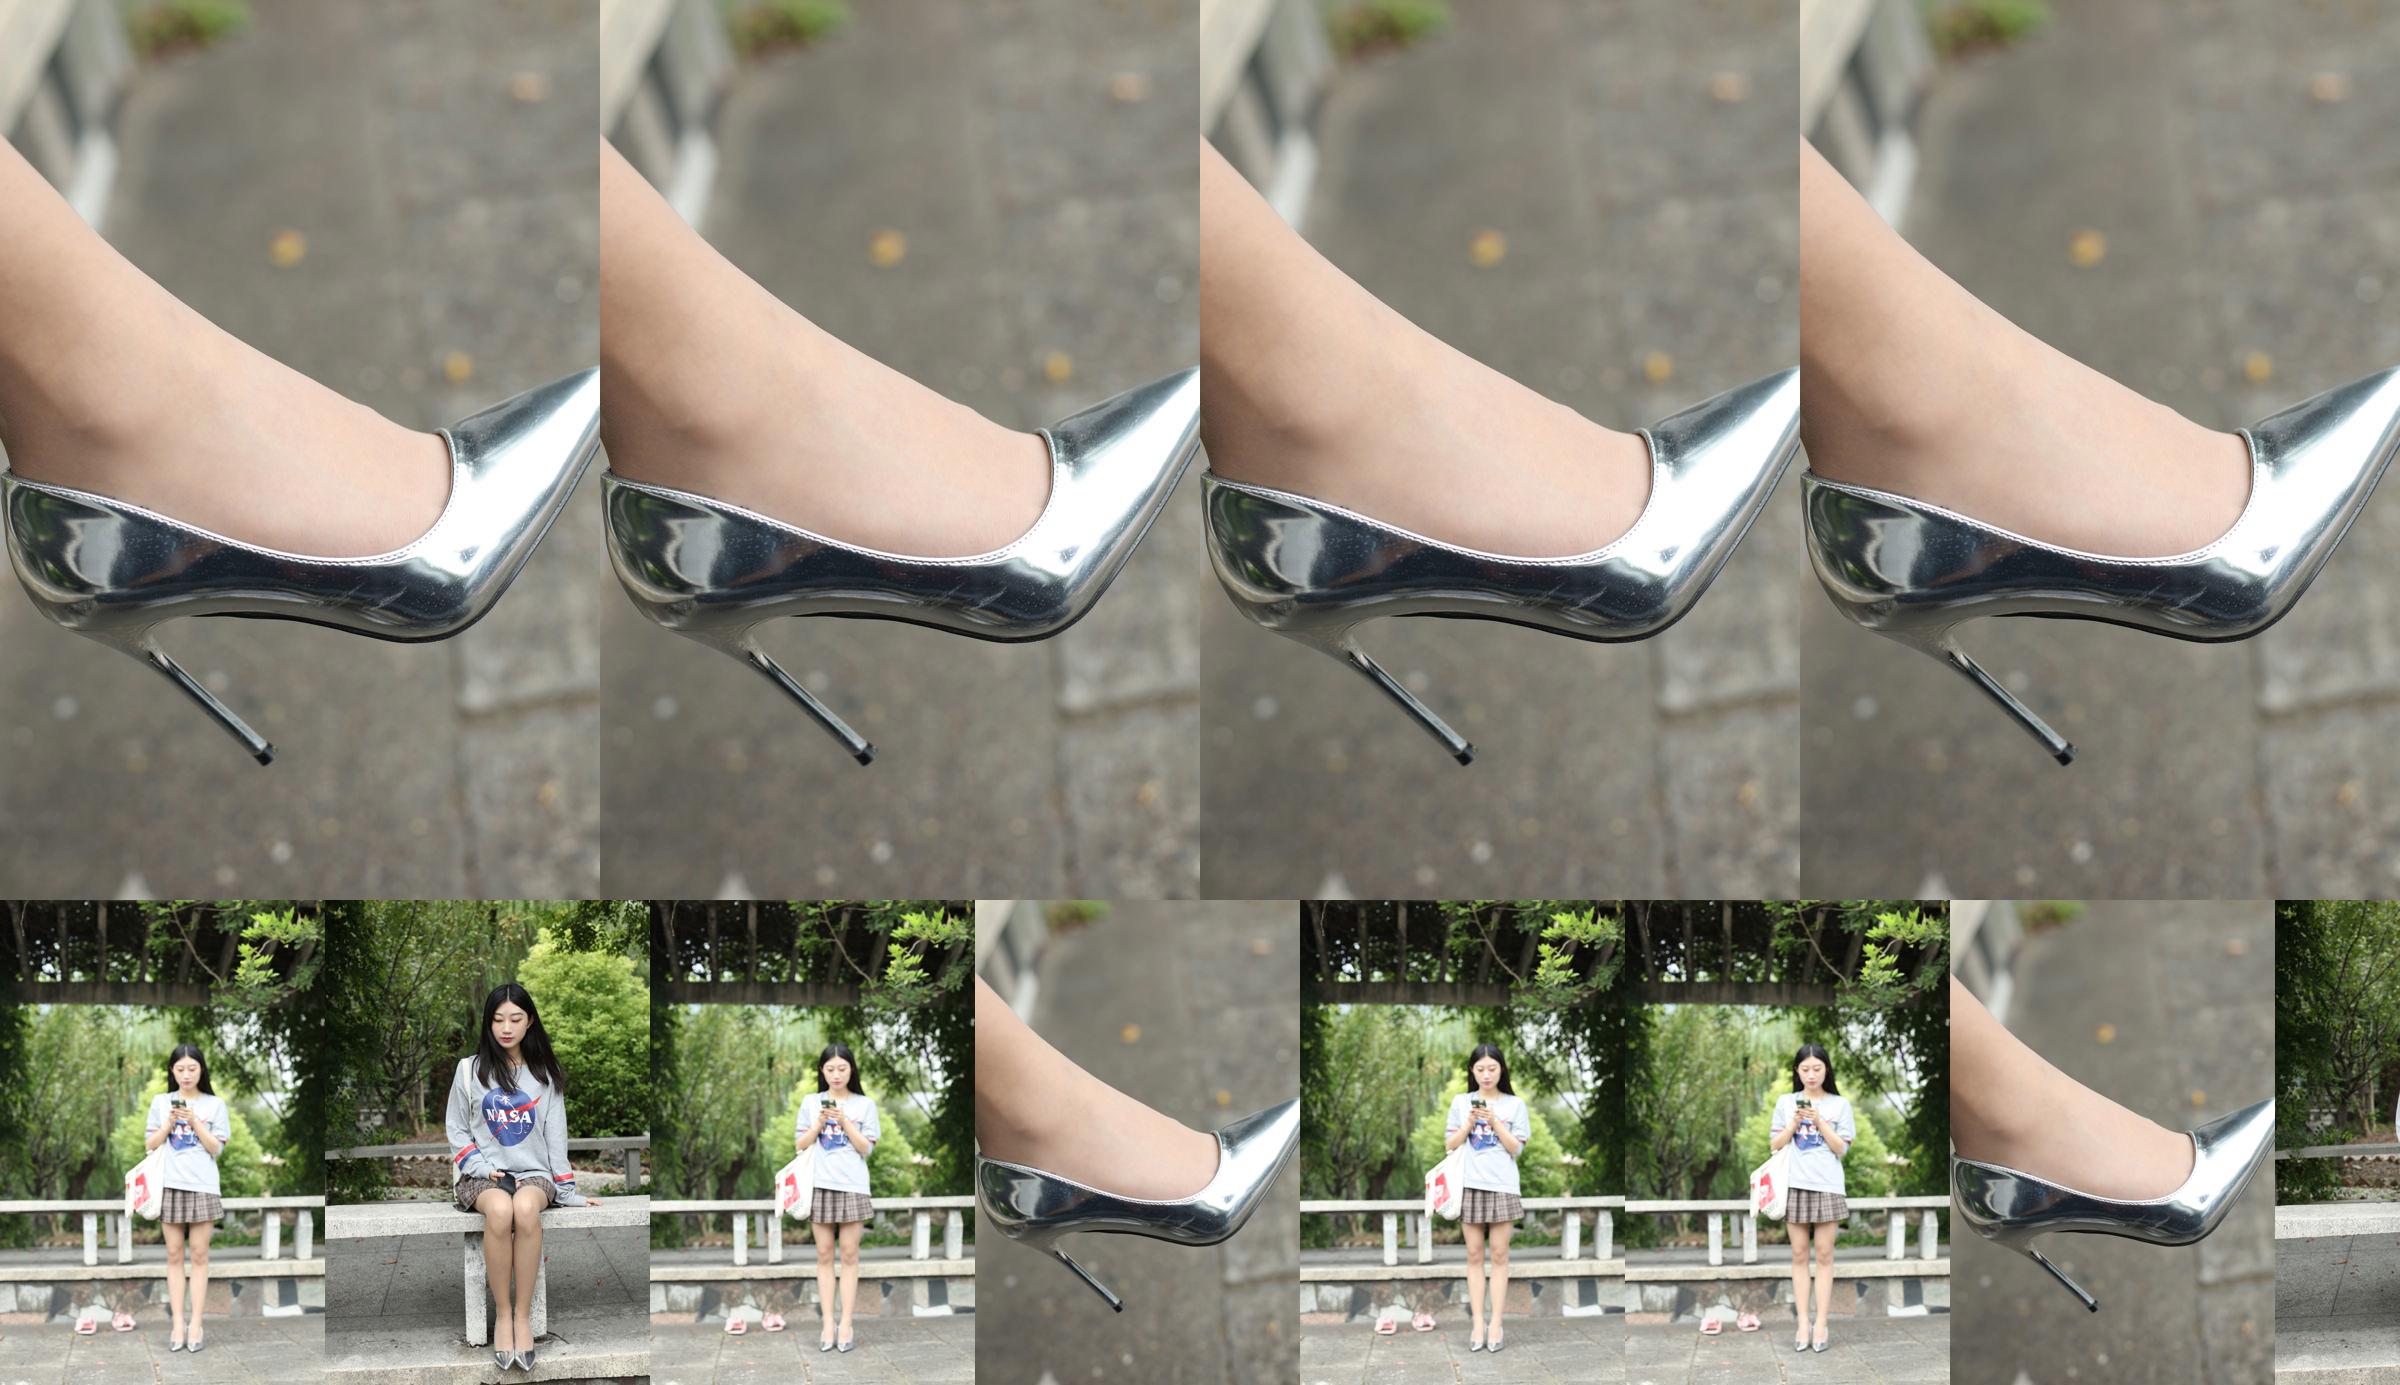 [Naisi] NO.147 Yi Ning, the soft girl on the long-legged stone bench No.03fb2d Page 8